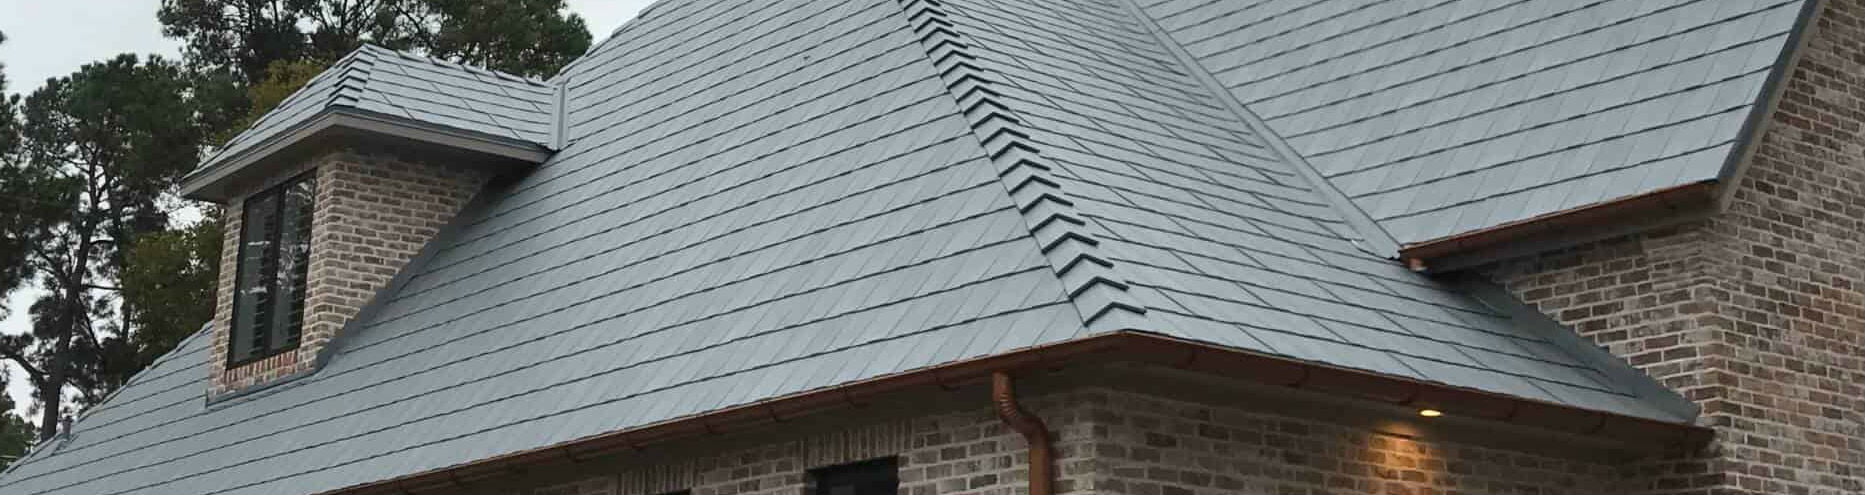 Magnolia TX metal roof installation